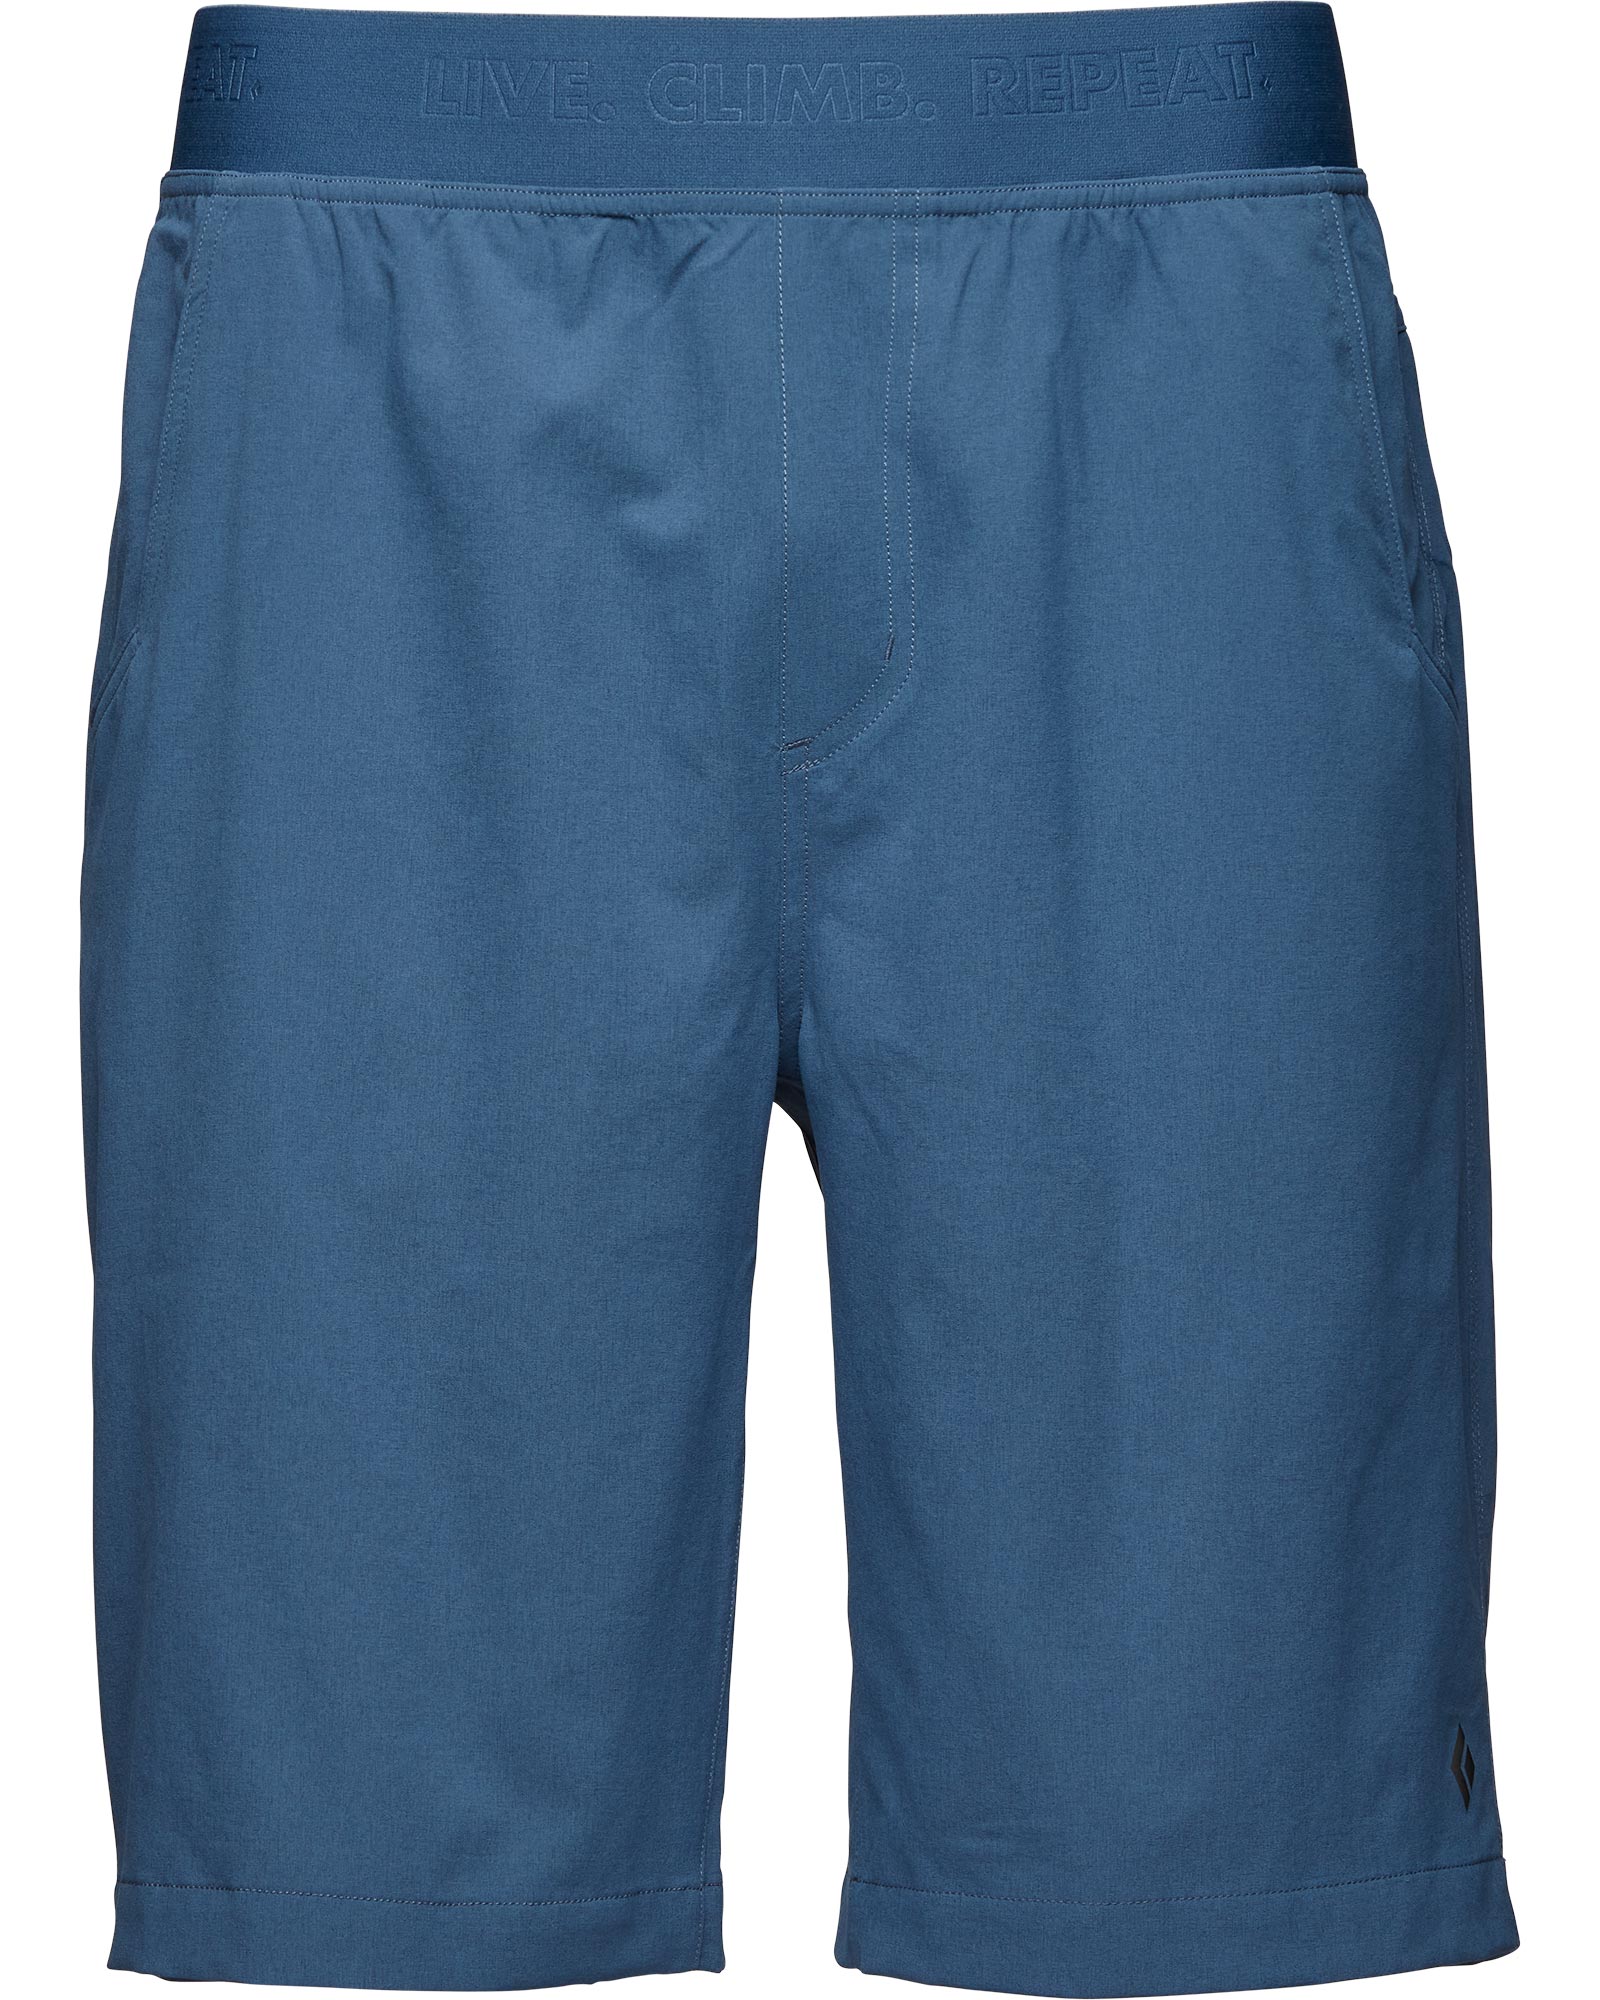 Black Diamond Sierra Men’s Shorts - Ink Blue S